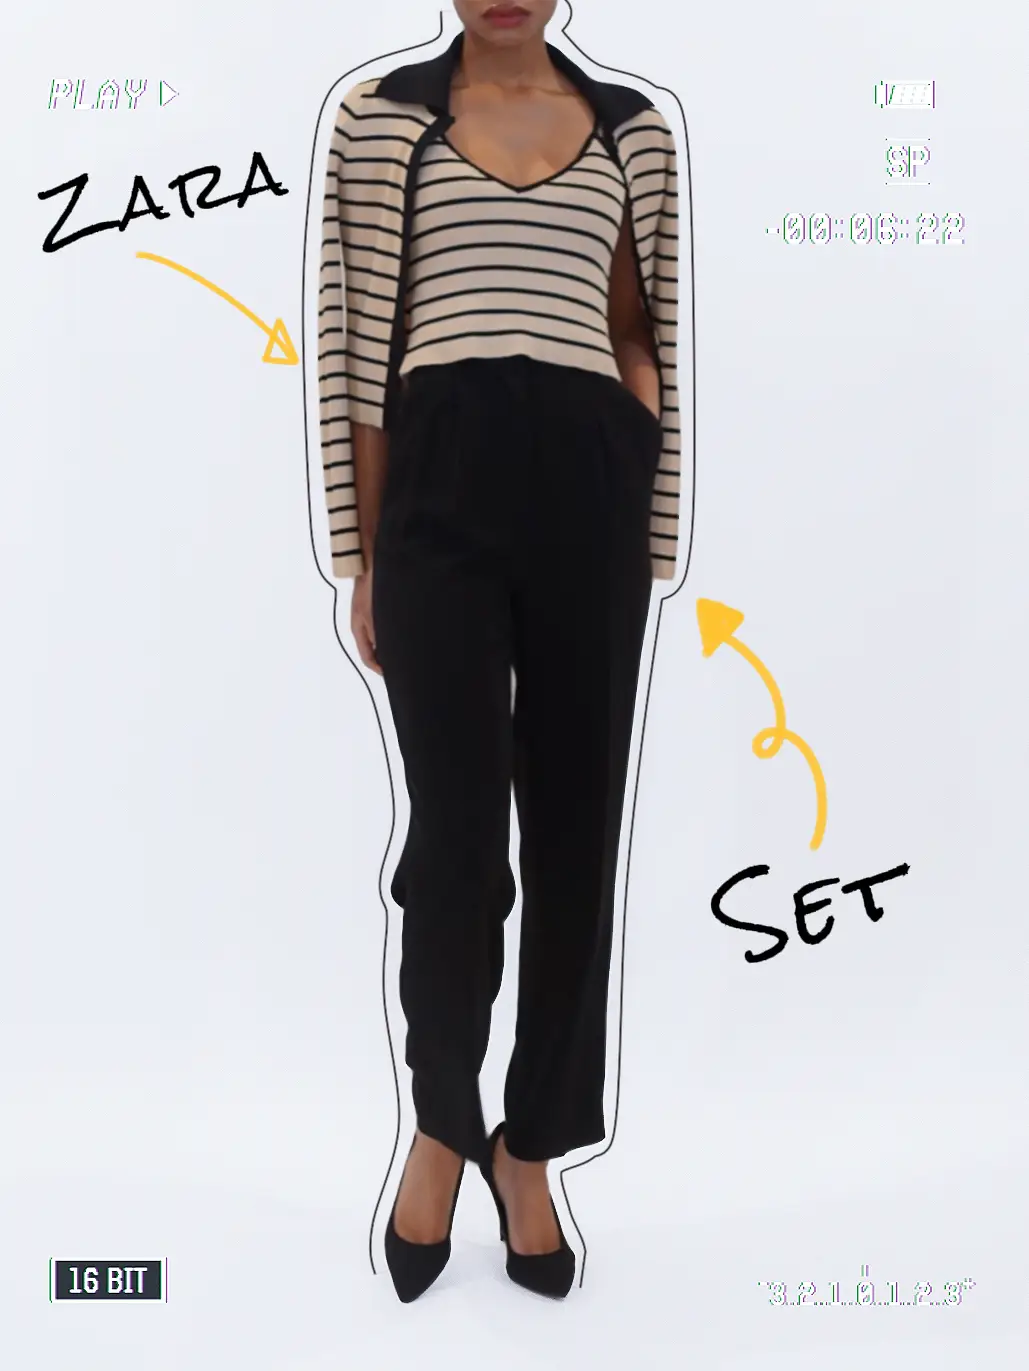 Zara Set, Gallery posted by Vidavinovalerie